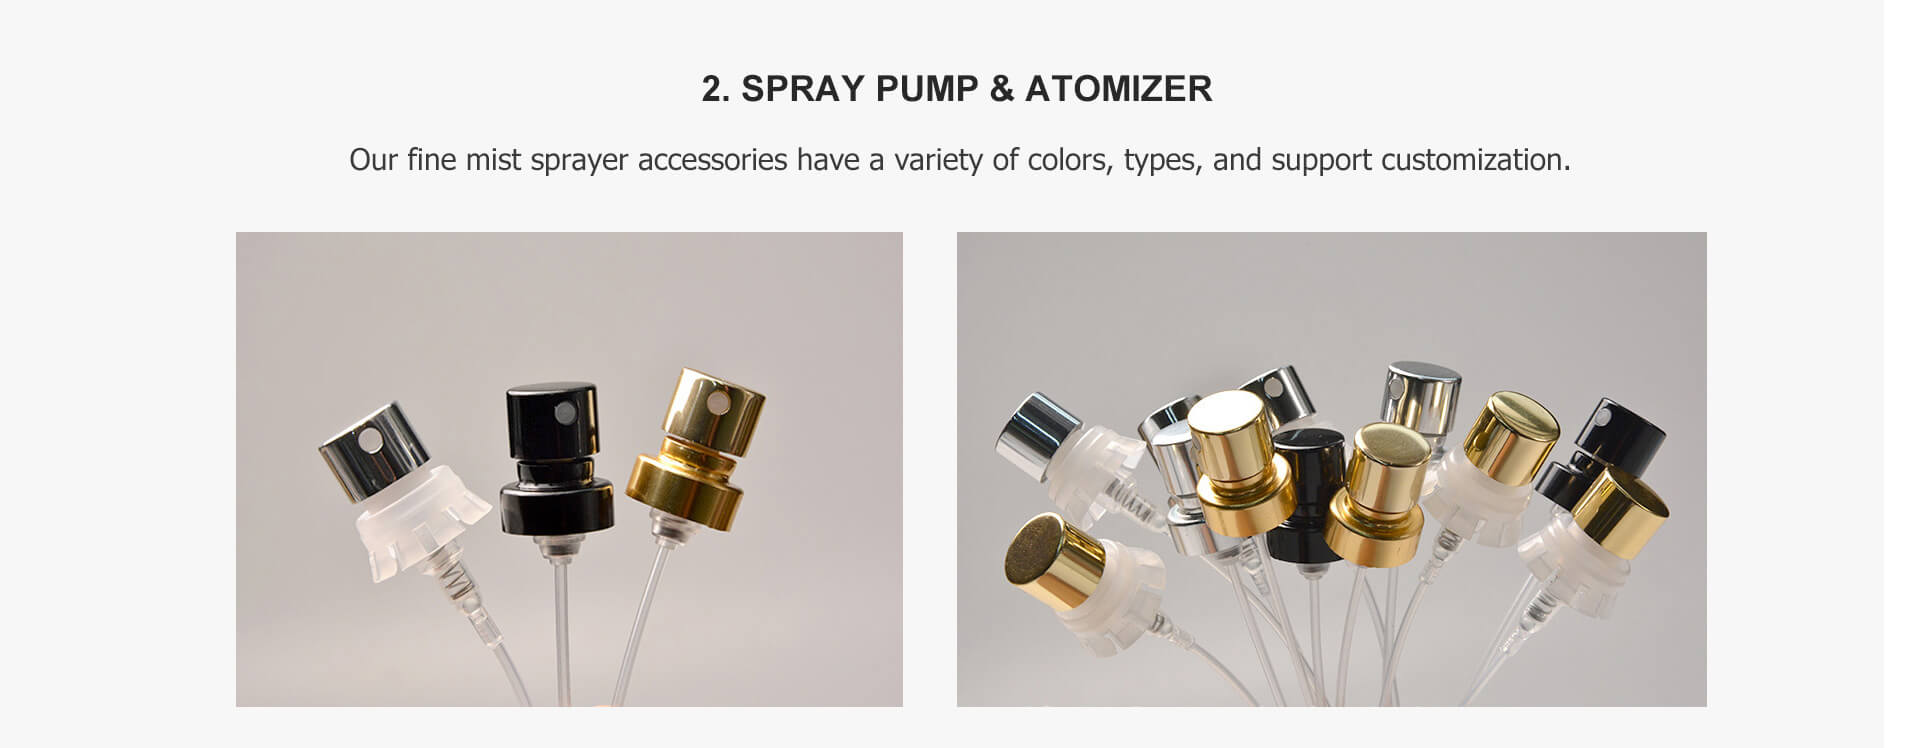 Spray Pump & Atomizer